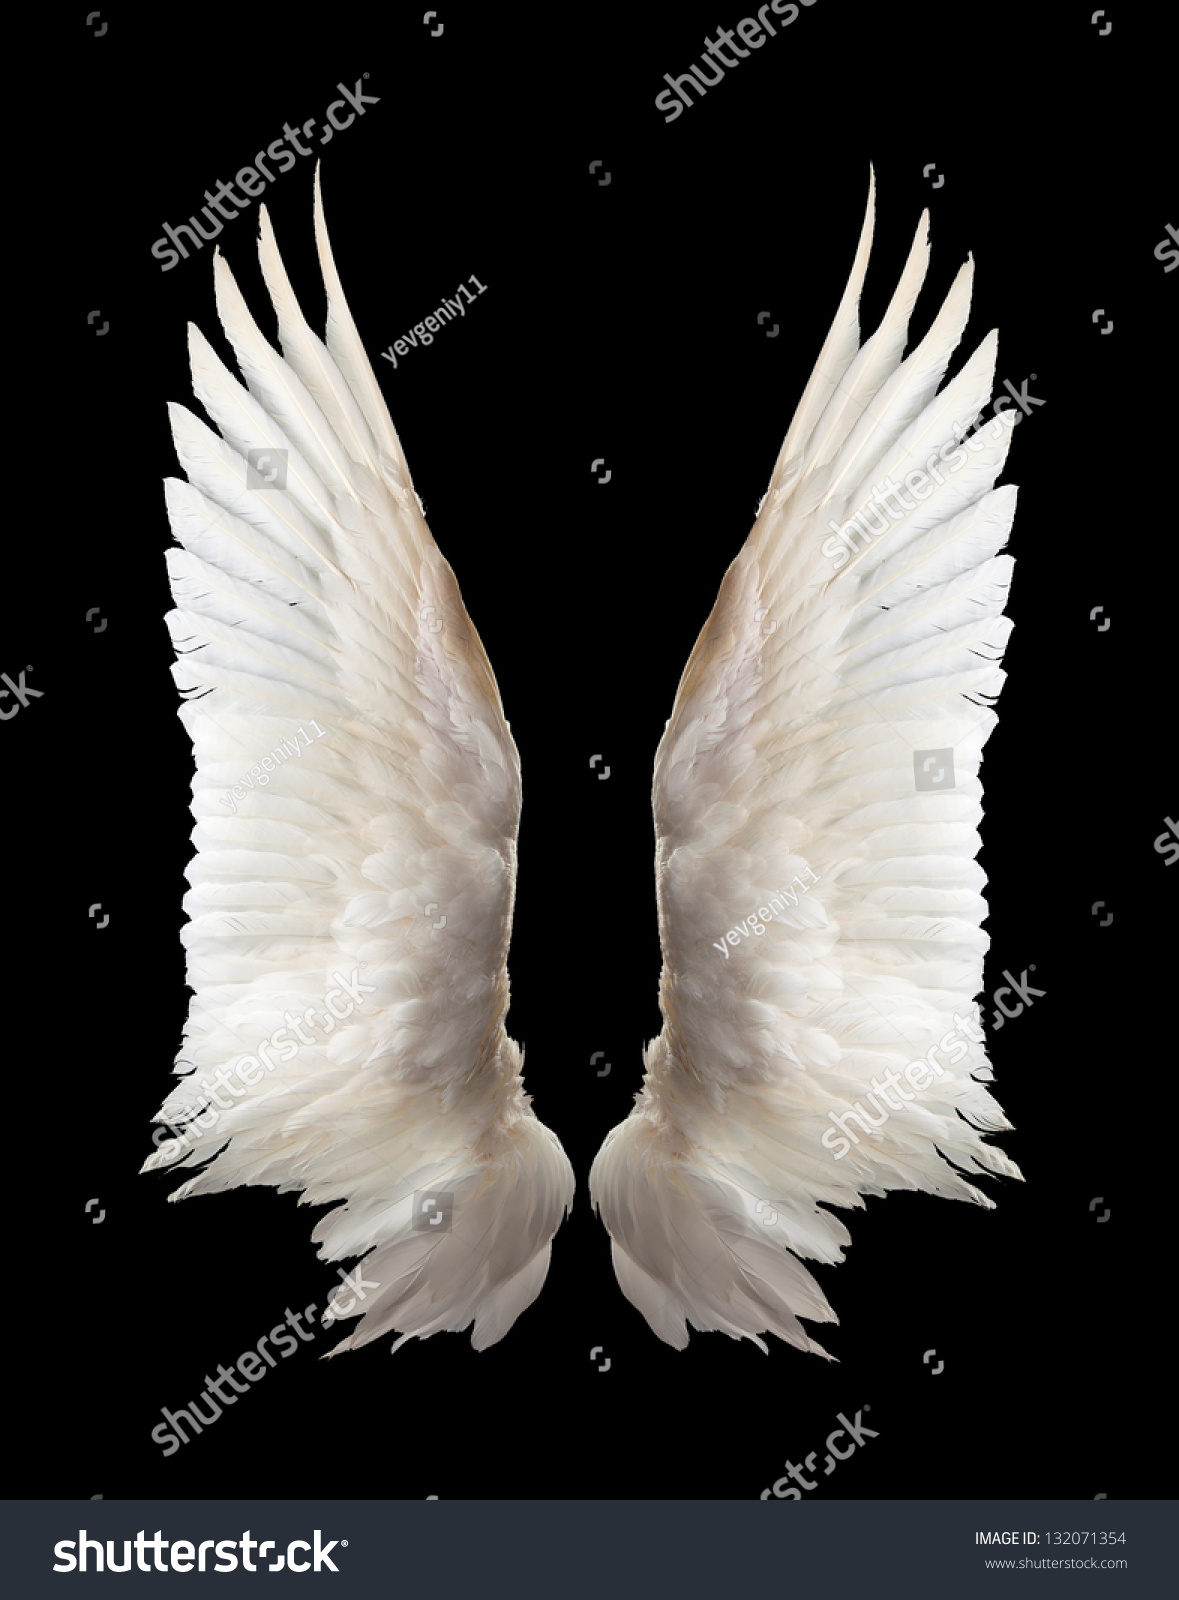 Internal white wing plumage. Isolation. #132071354